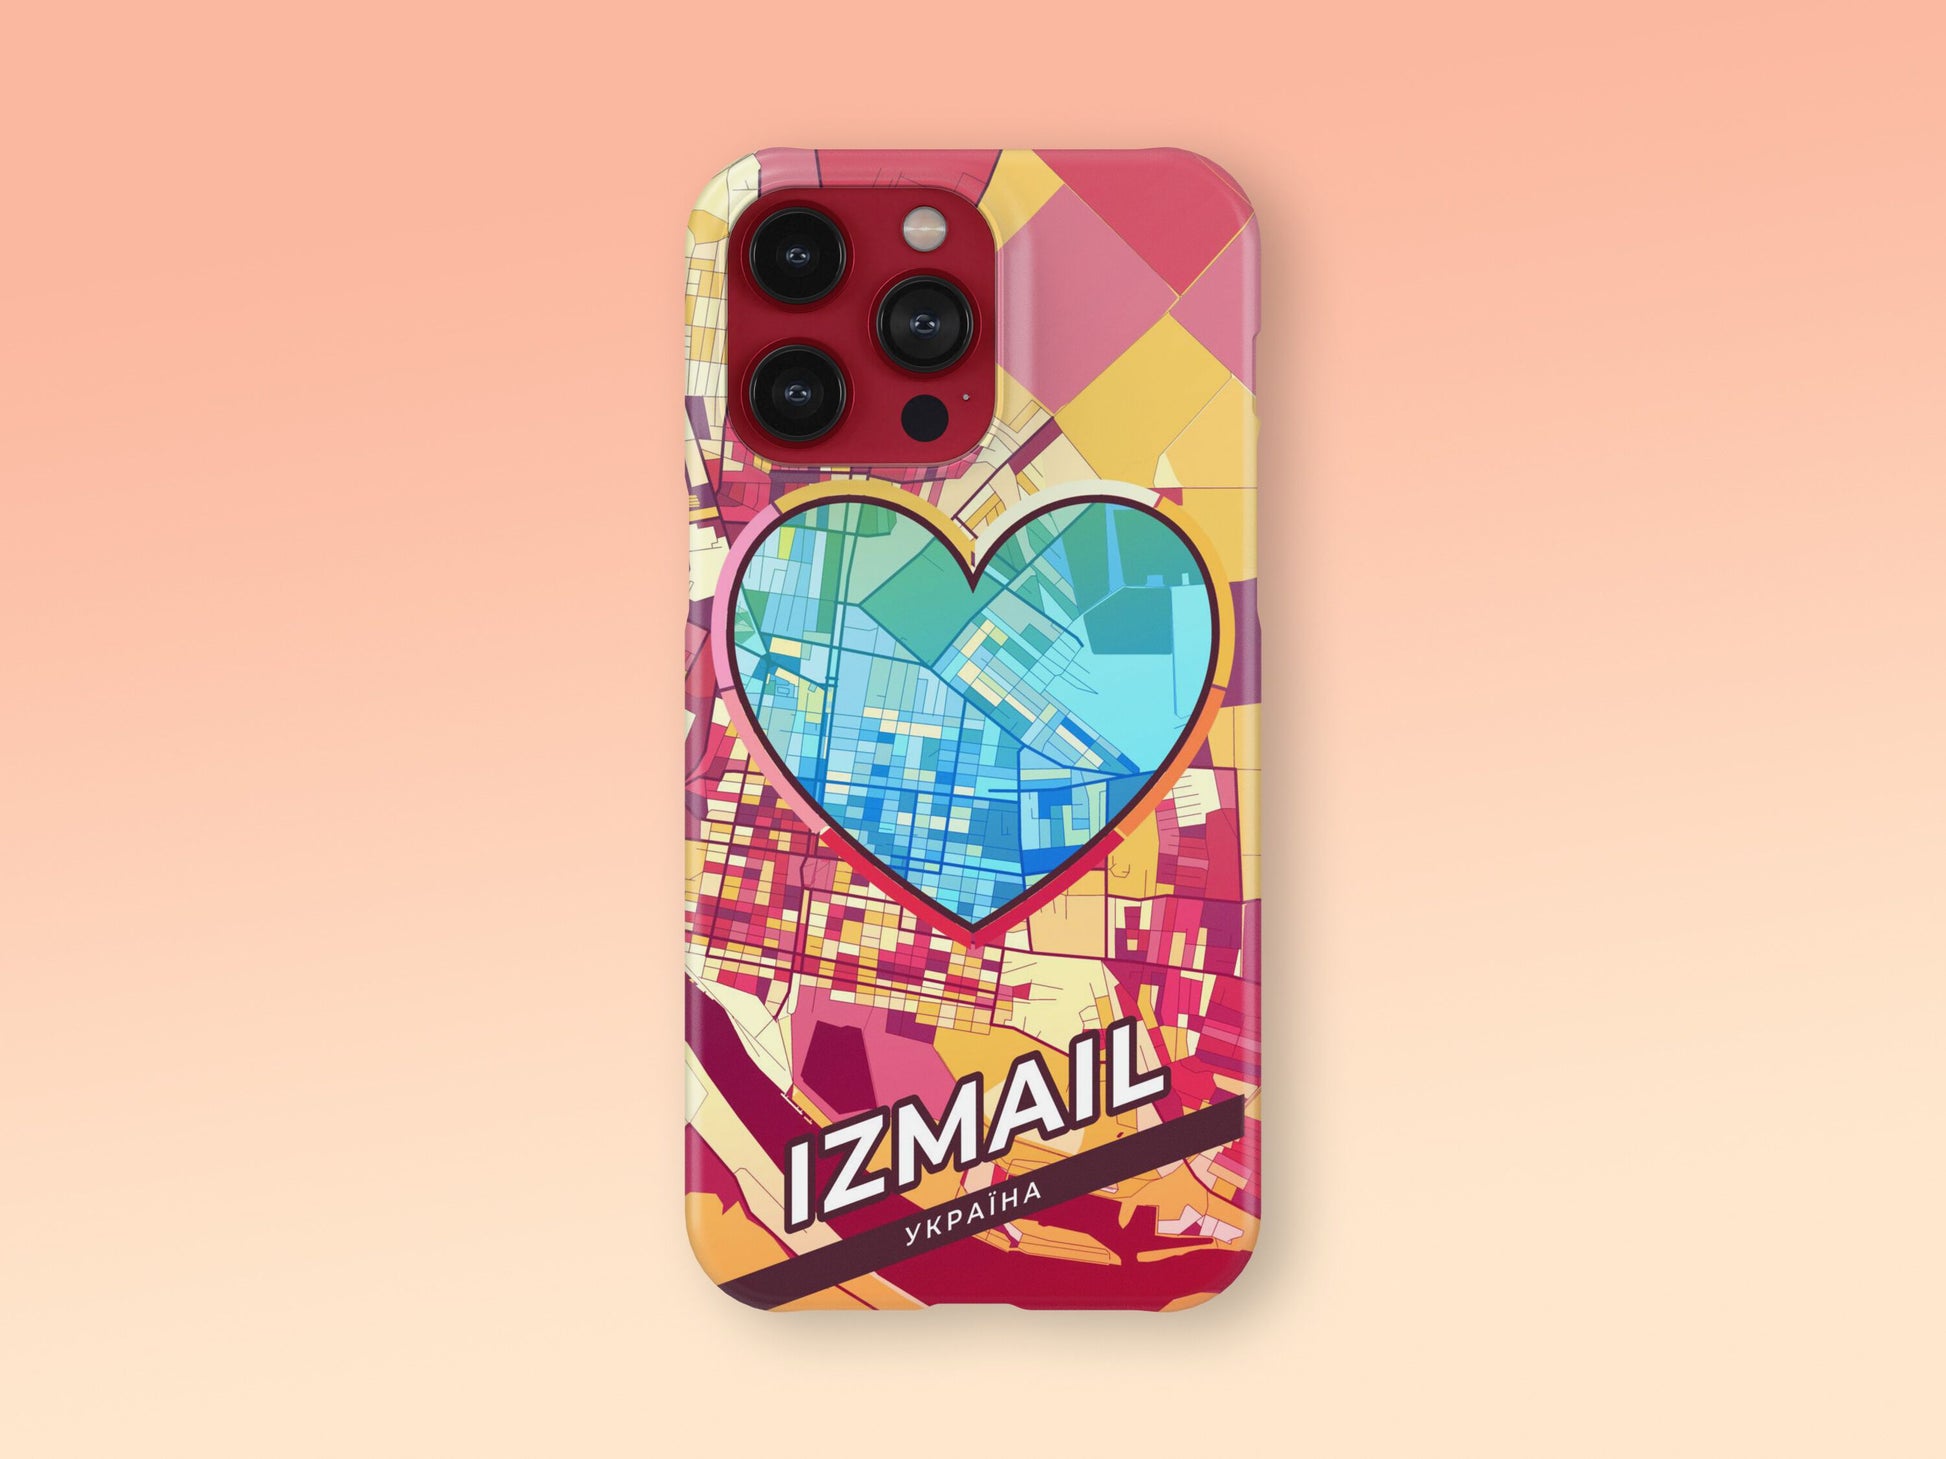 Izmail Ukraine slim phone case with colorful icon. Birthday, wedding or housewarming gift. Couple match cases. 2